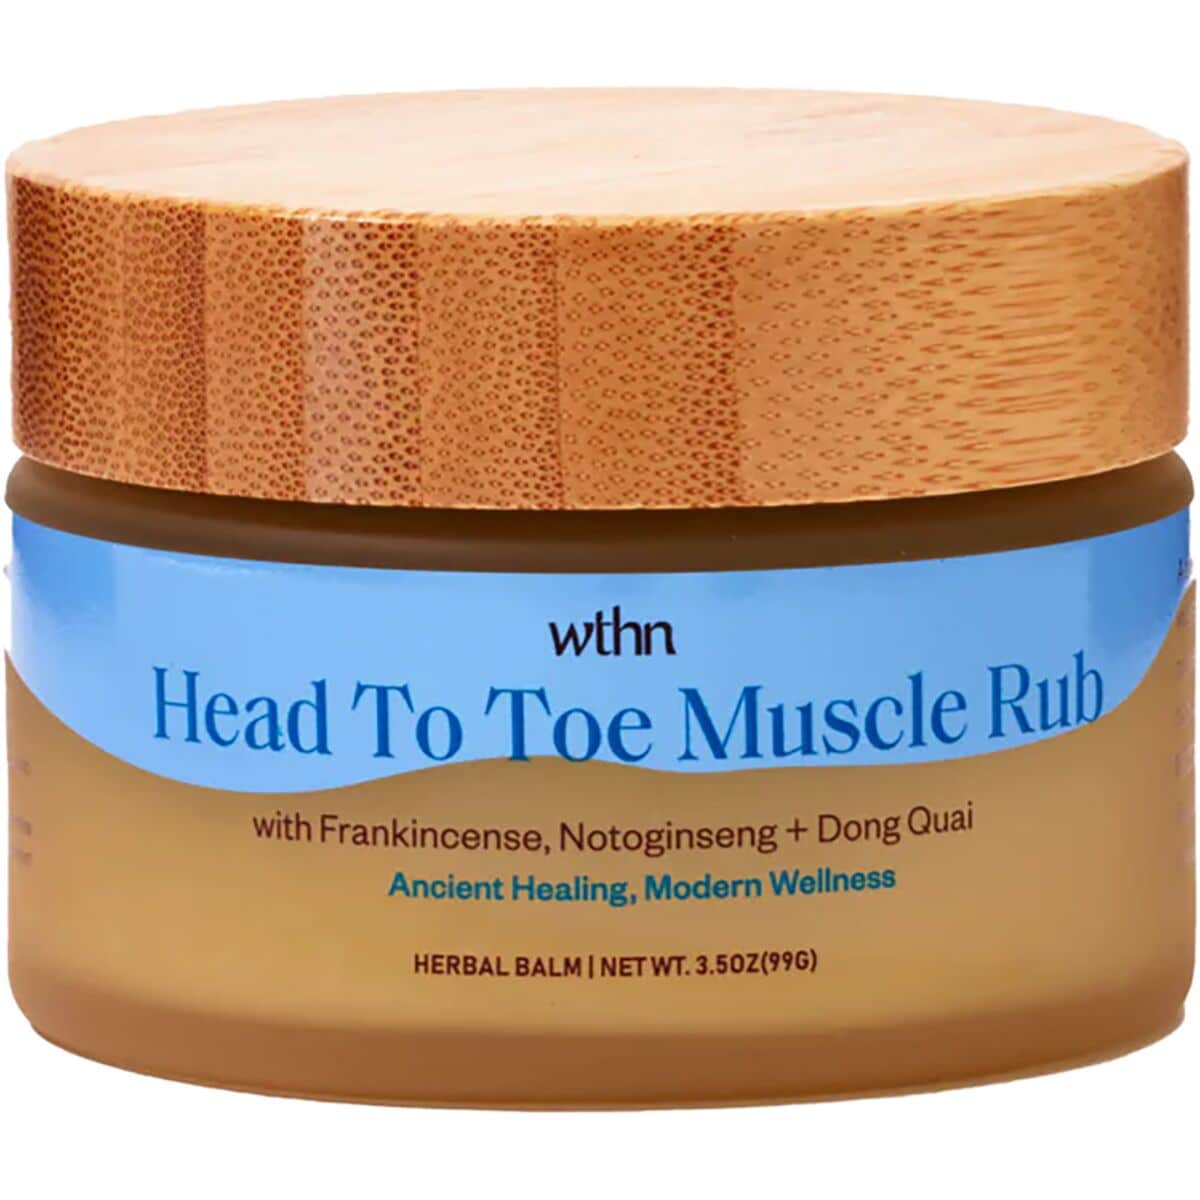 WTHN Head to Toe Muscle Rub